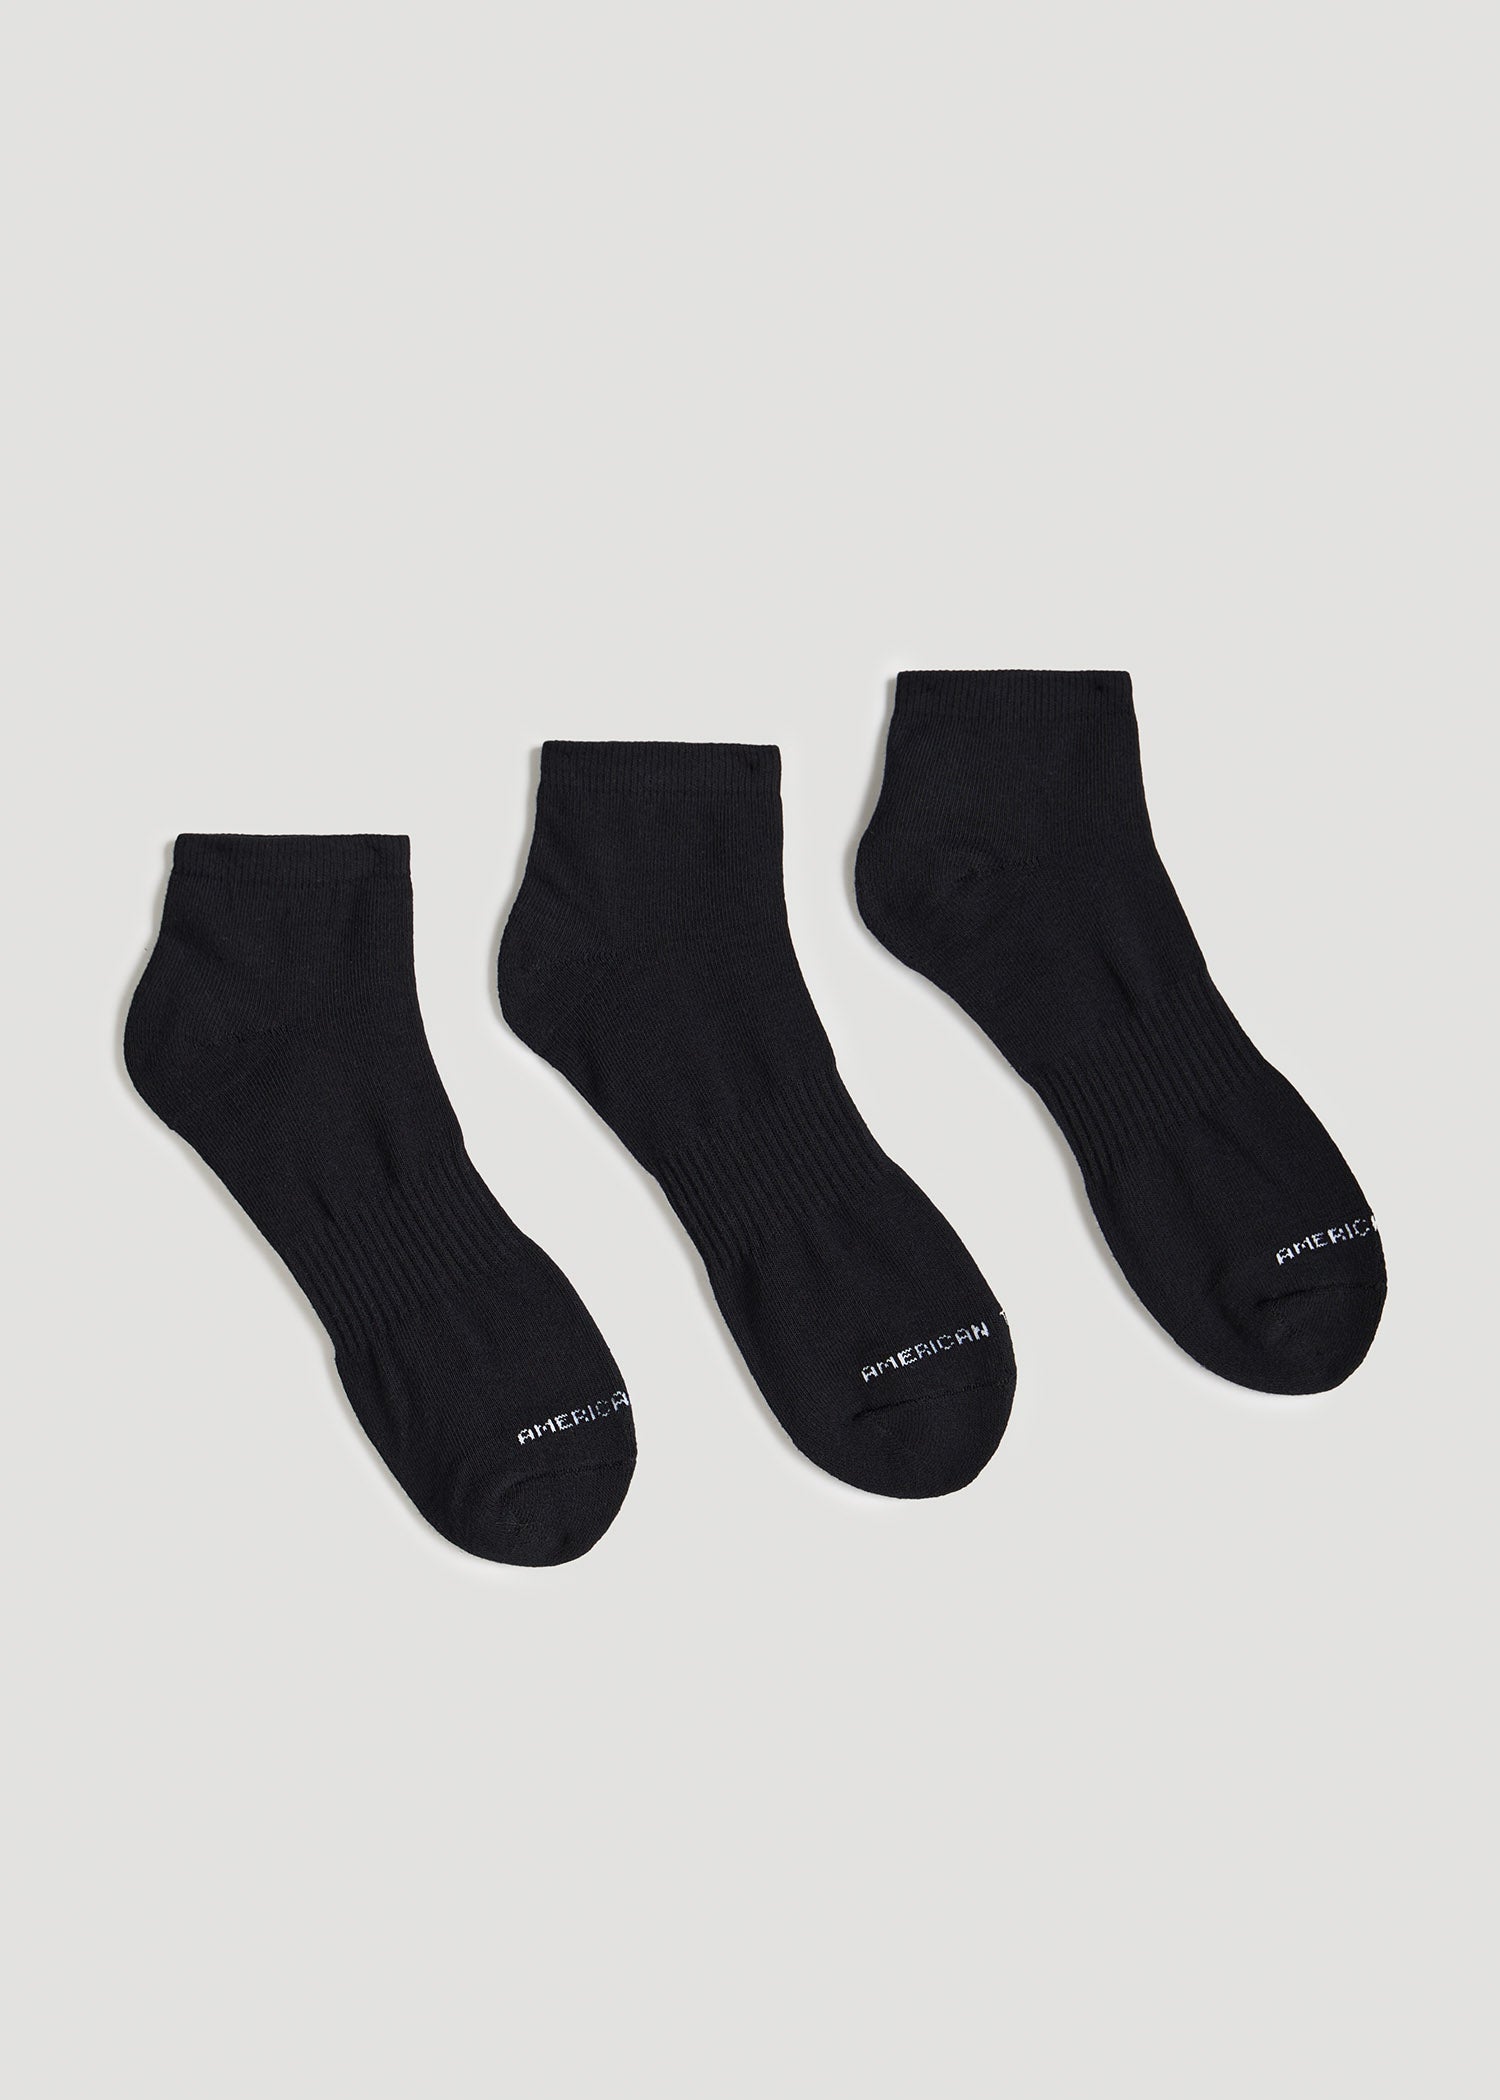 Men's Athletic Low Ankle Socks (X-Large Size: 13-15) | Black 3 Pack ...